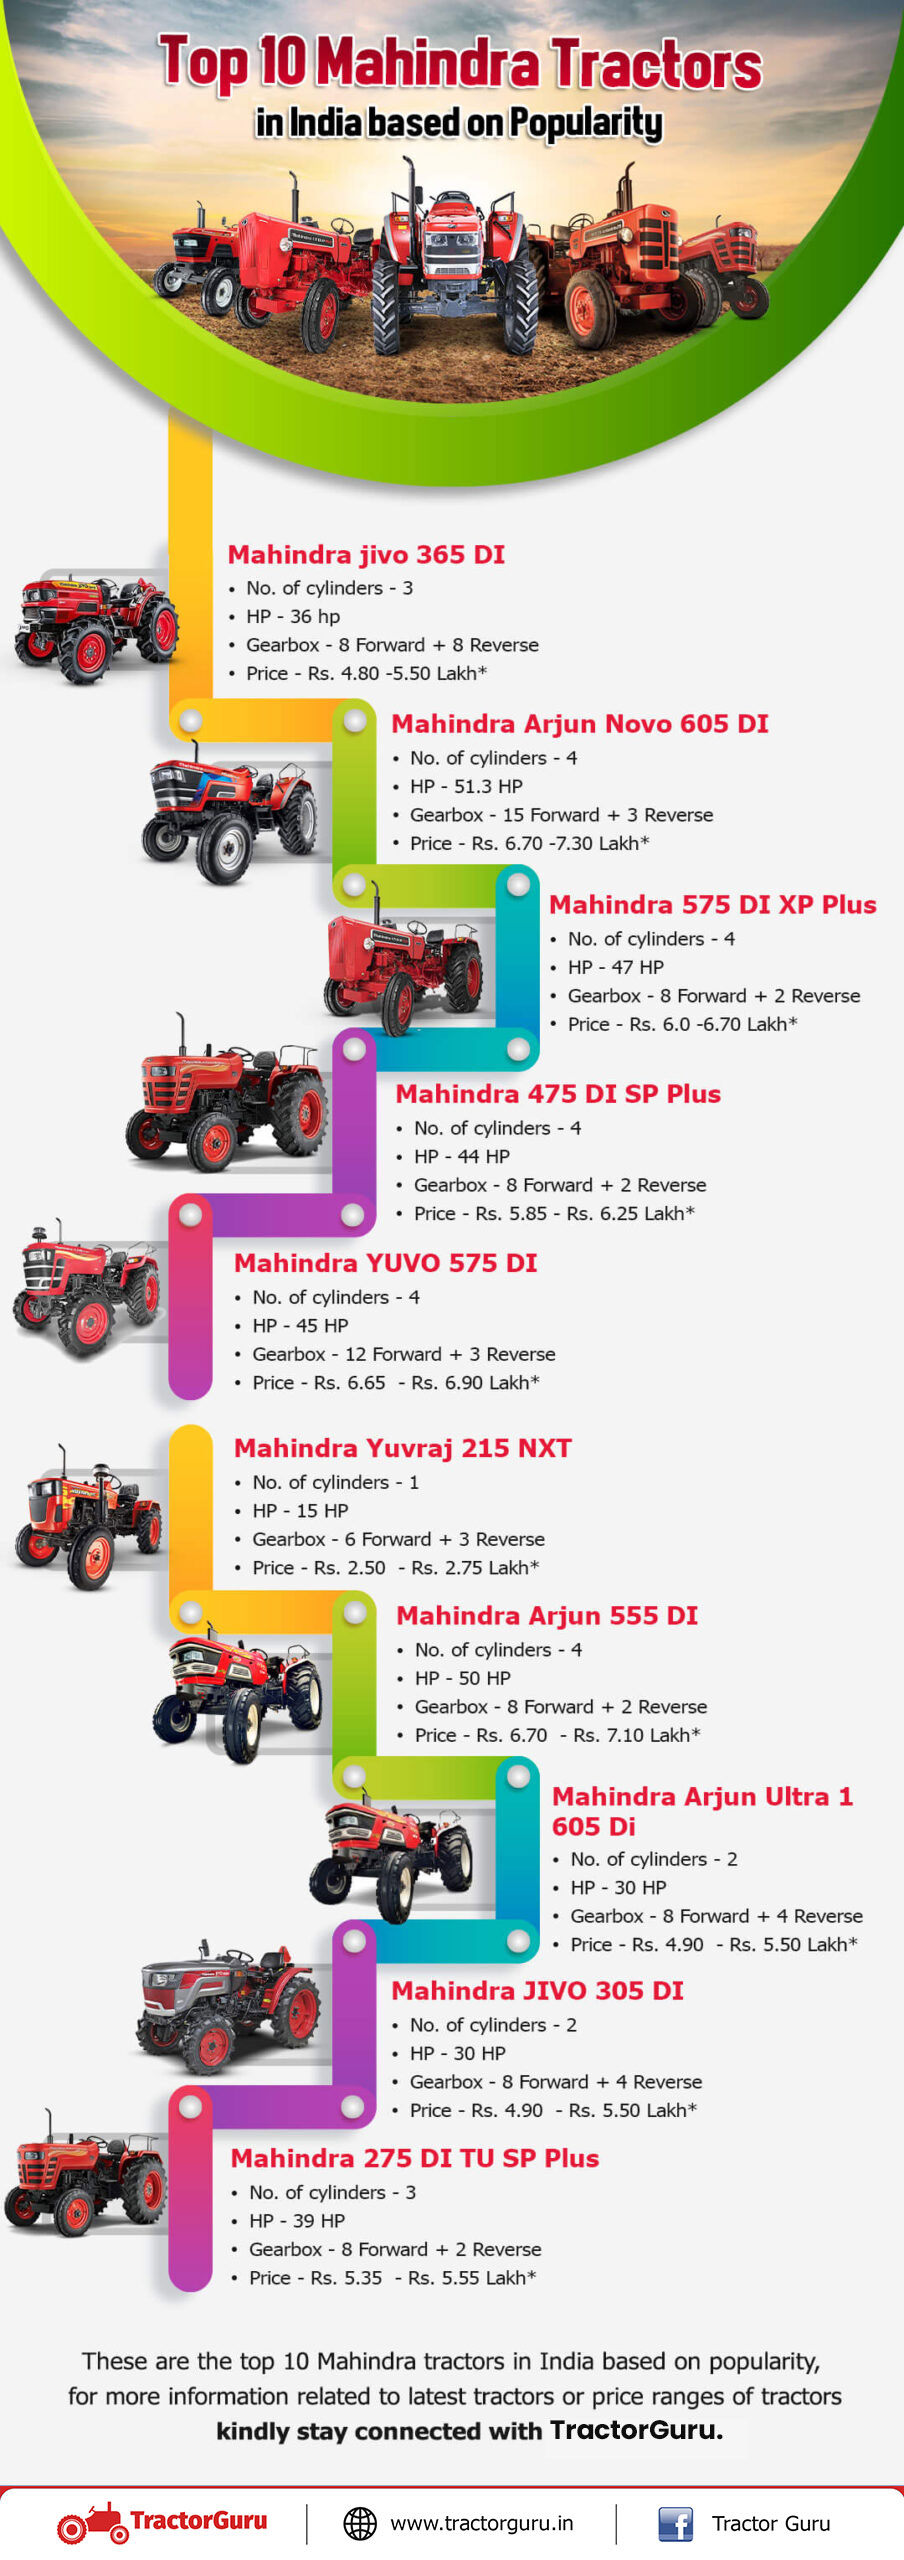 Top 10 Mahindra Tractors Infographic